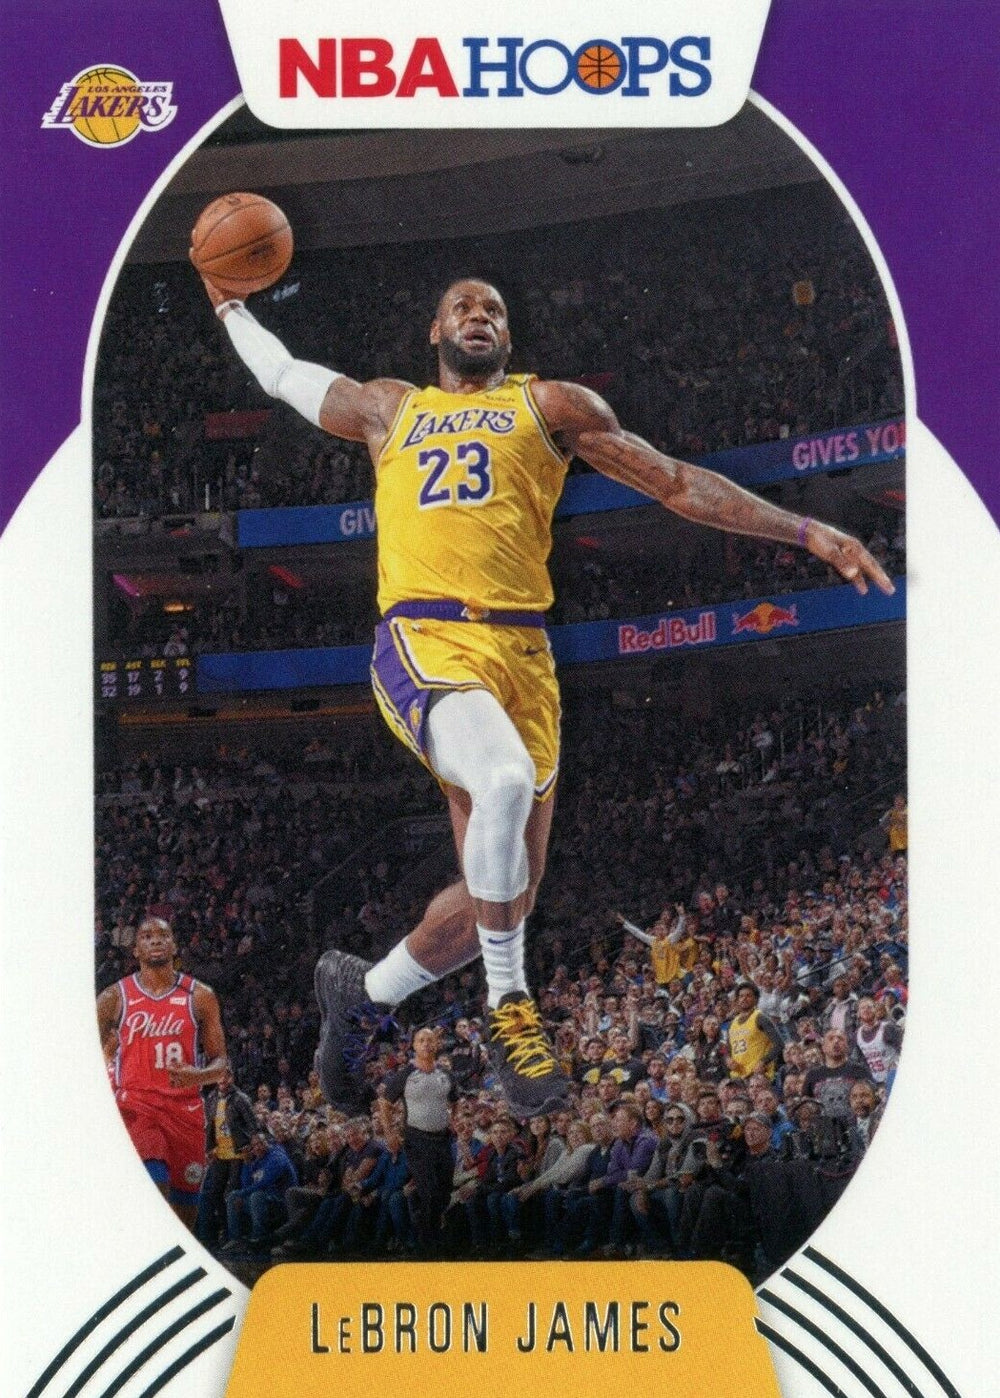 LeBron James 2020 2021 Hoops Series Mint Card #146